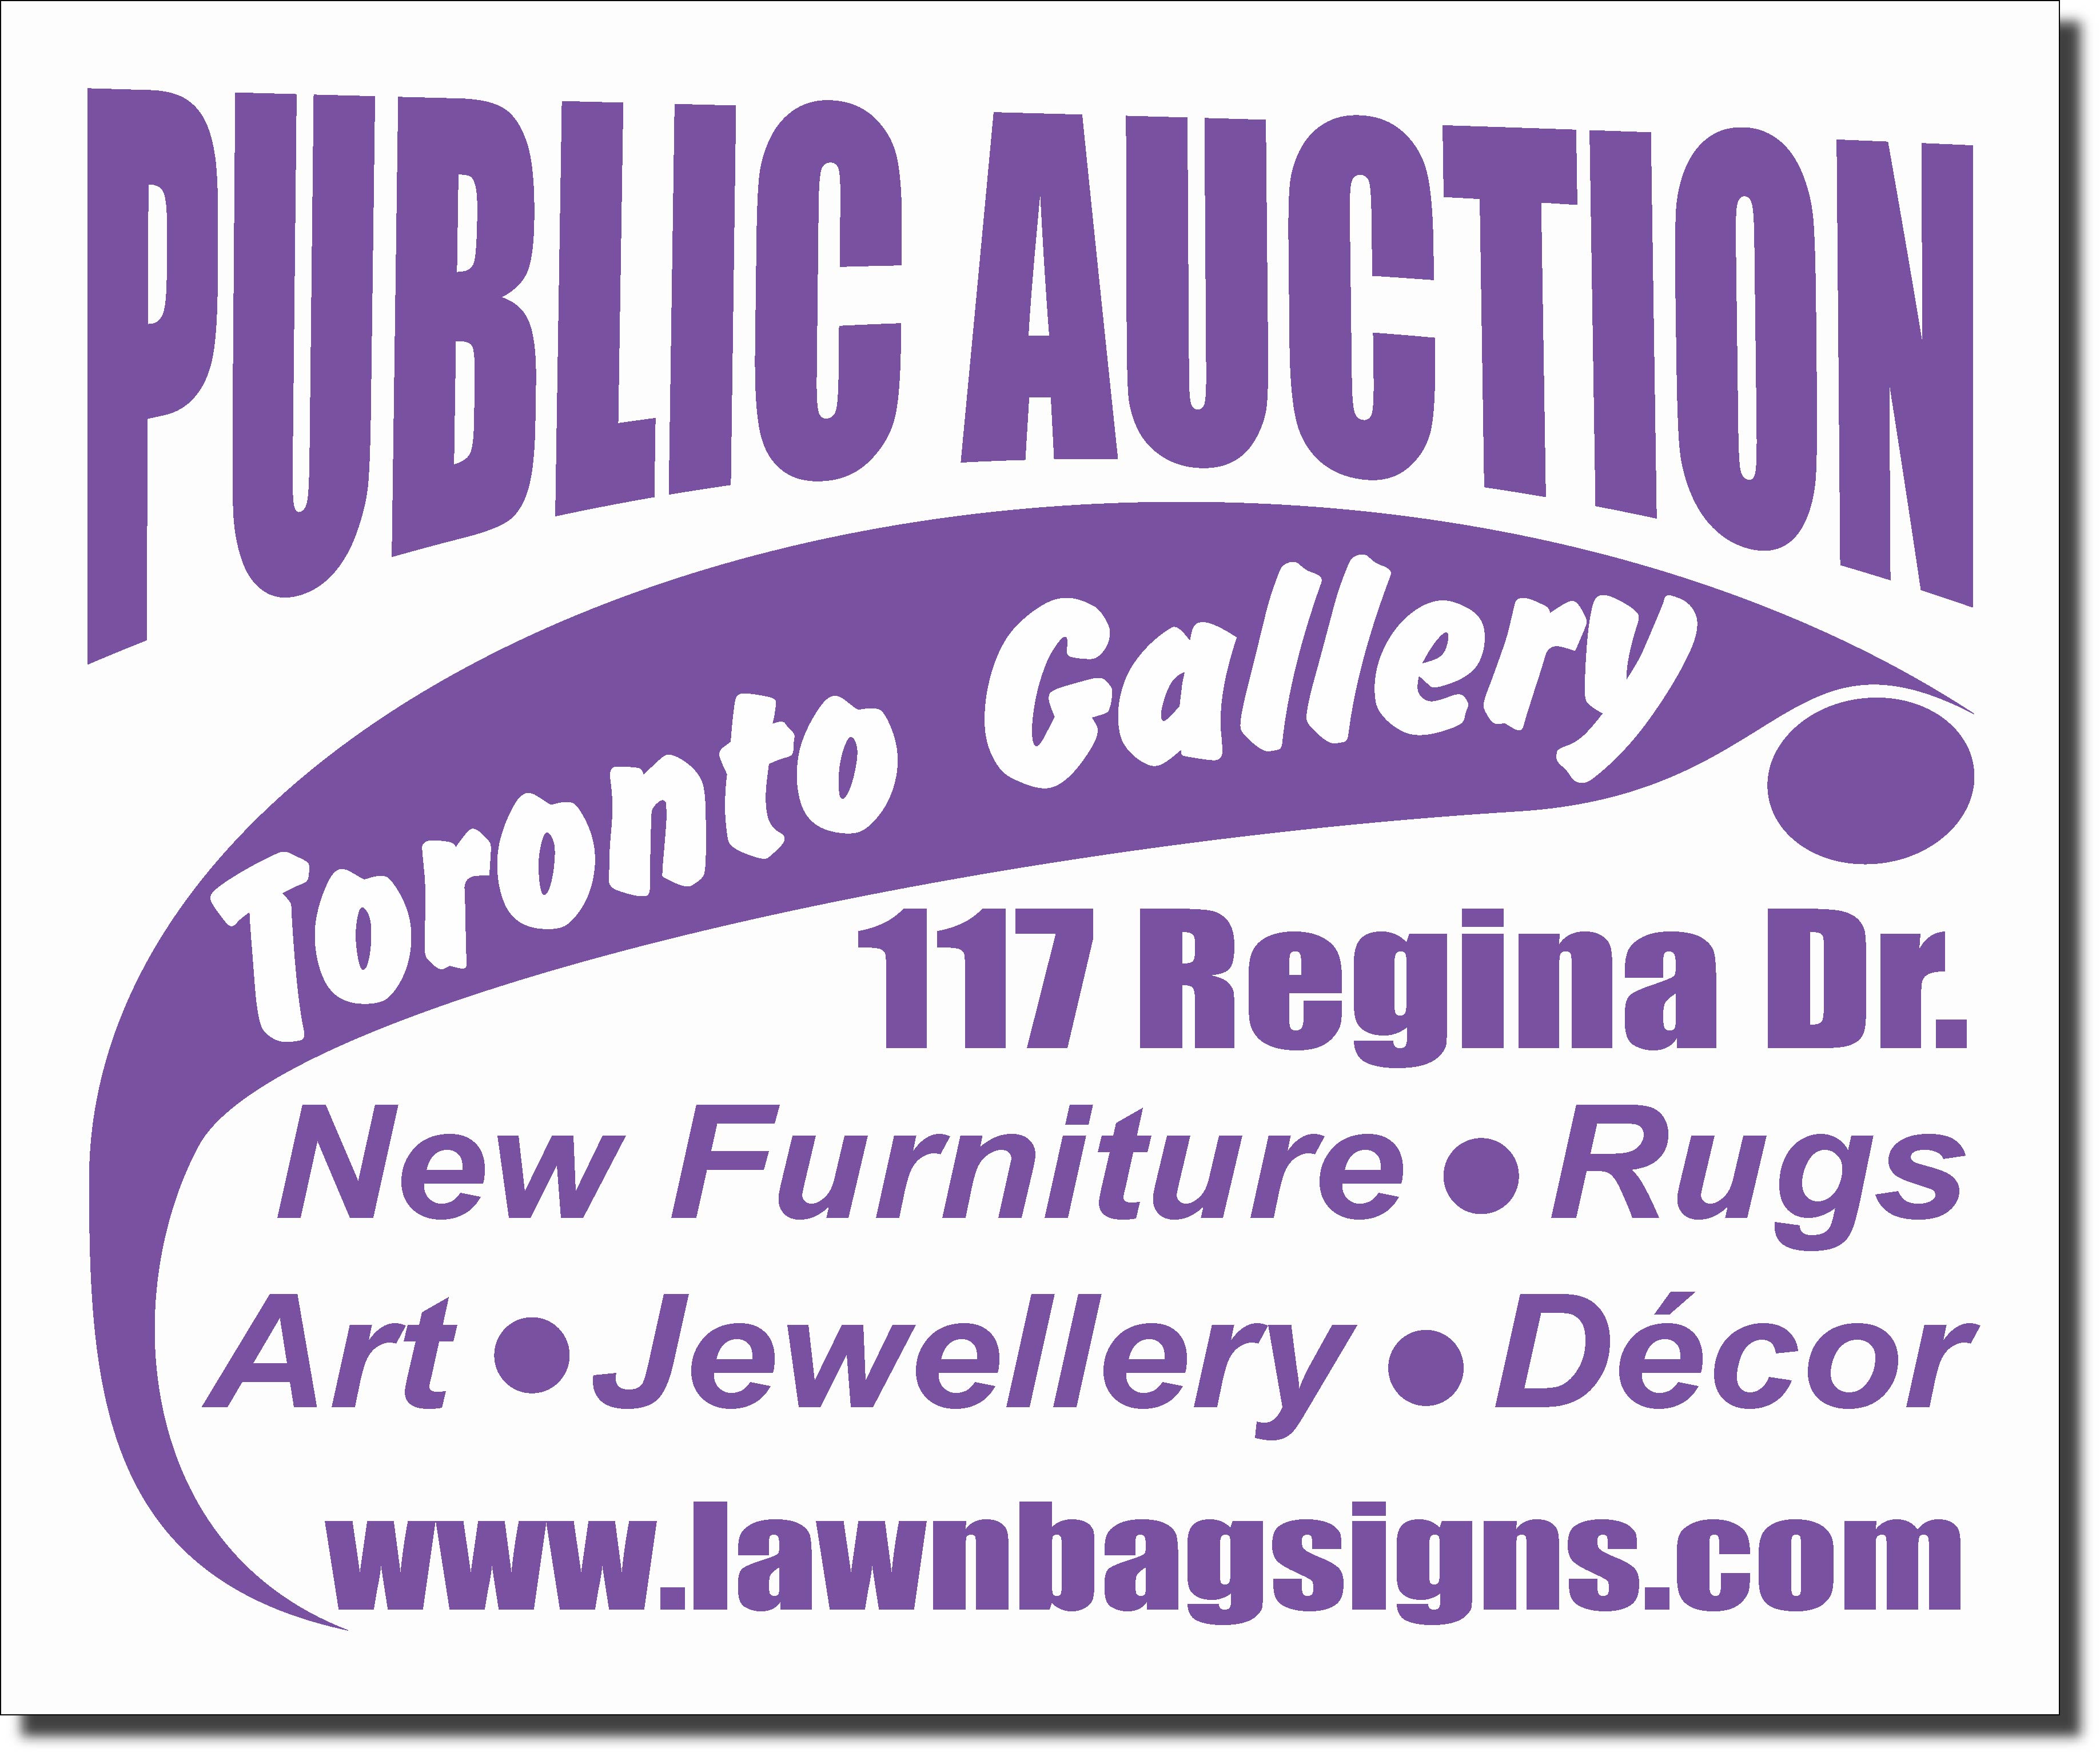 Toronto Gallery 24 x 20 Lawn Bag